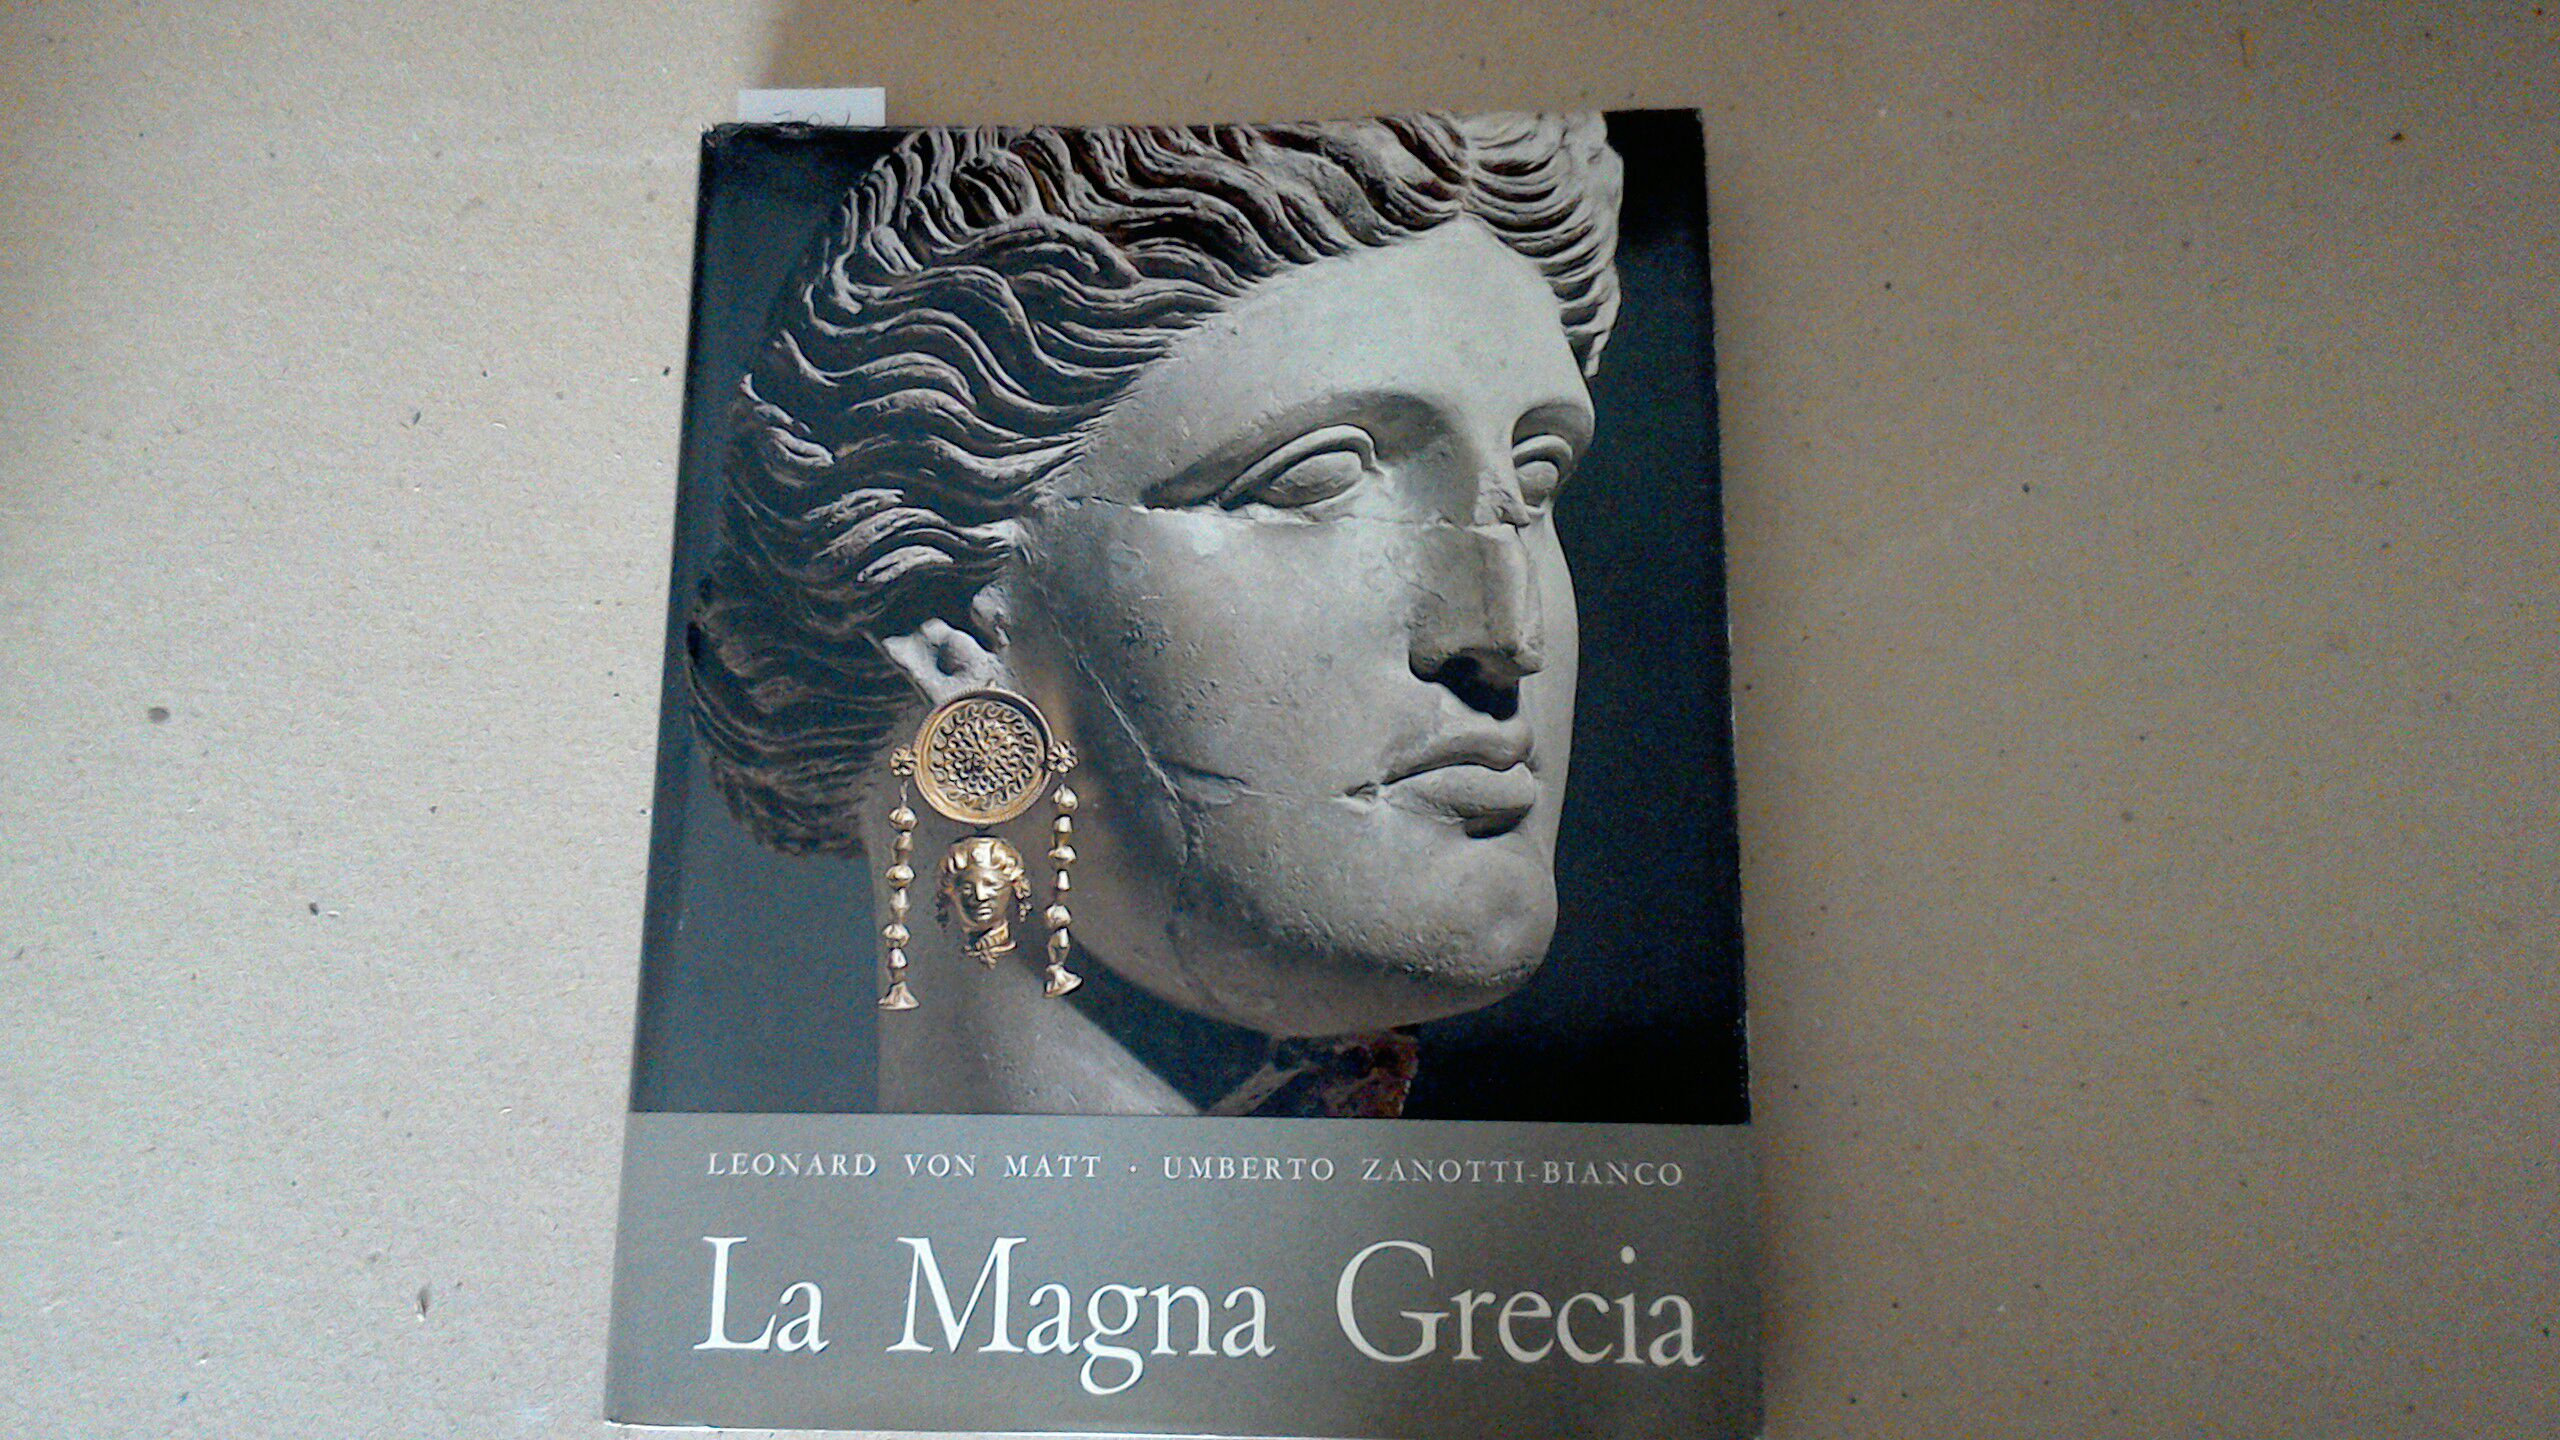 La Magna Grecia